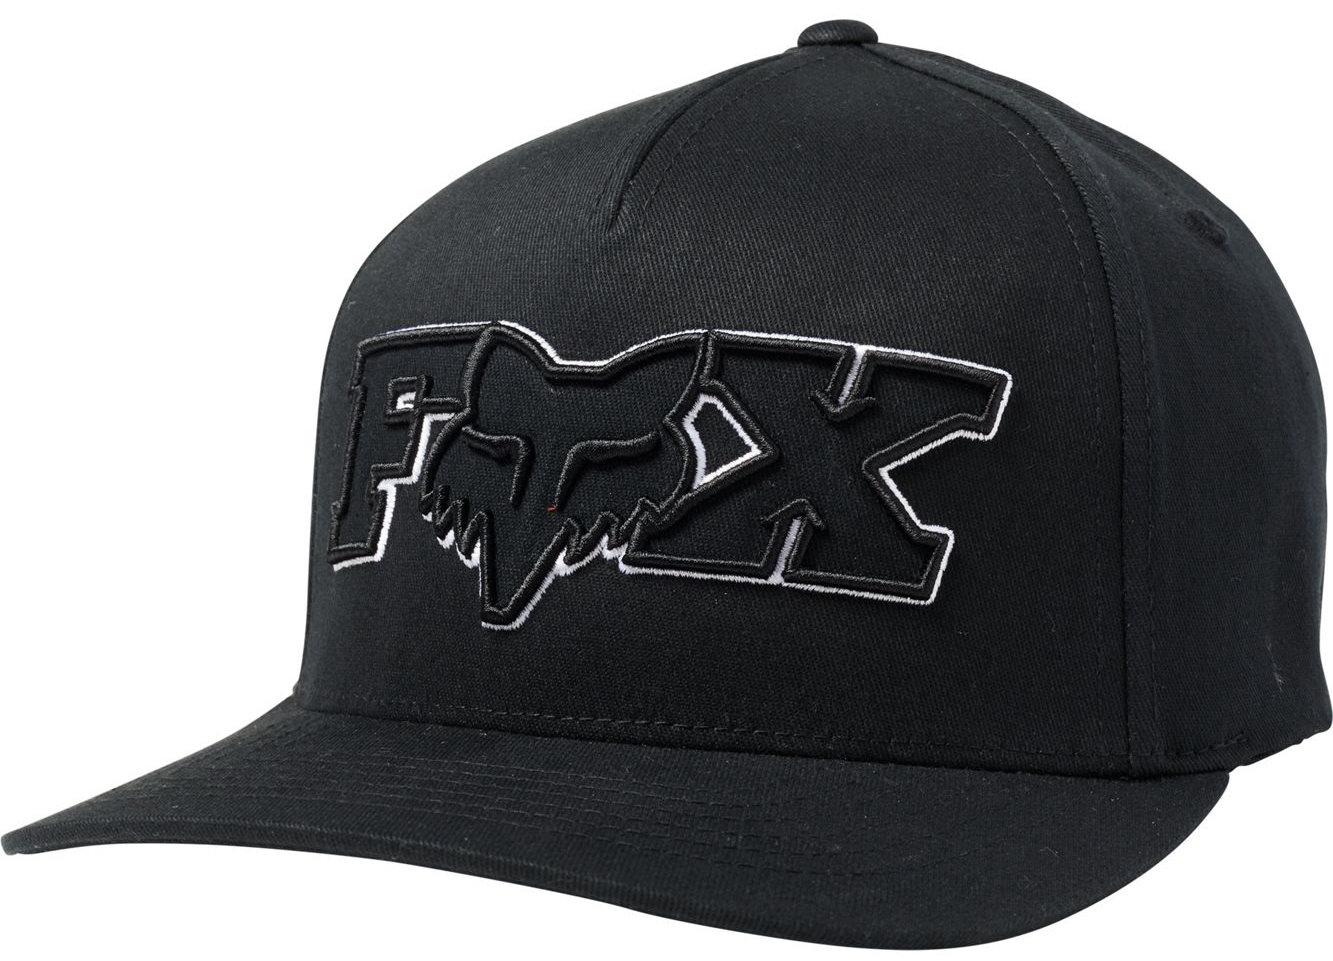  Ellipsoid Flexfit Hat